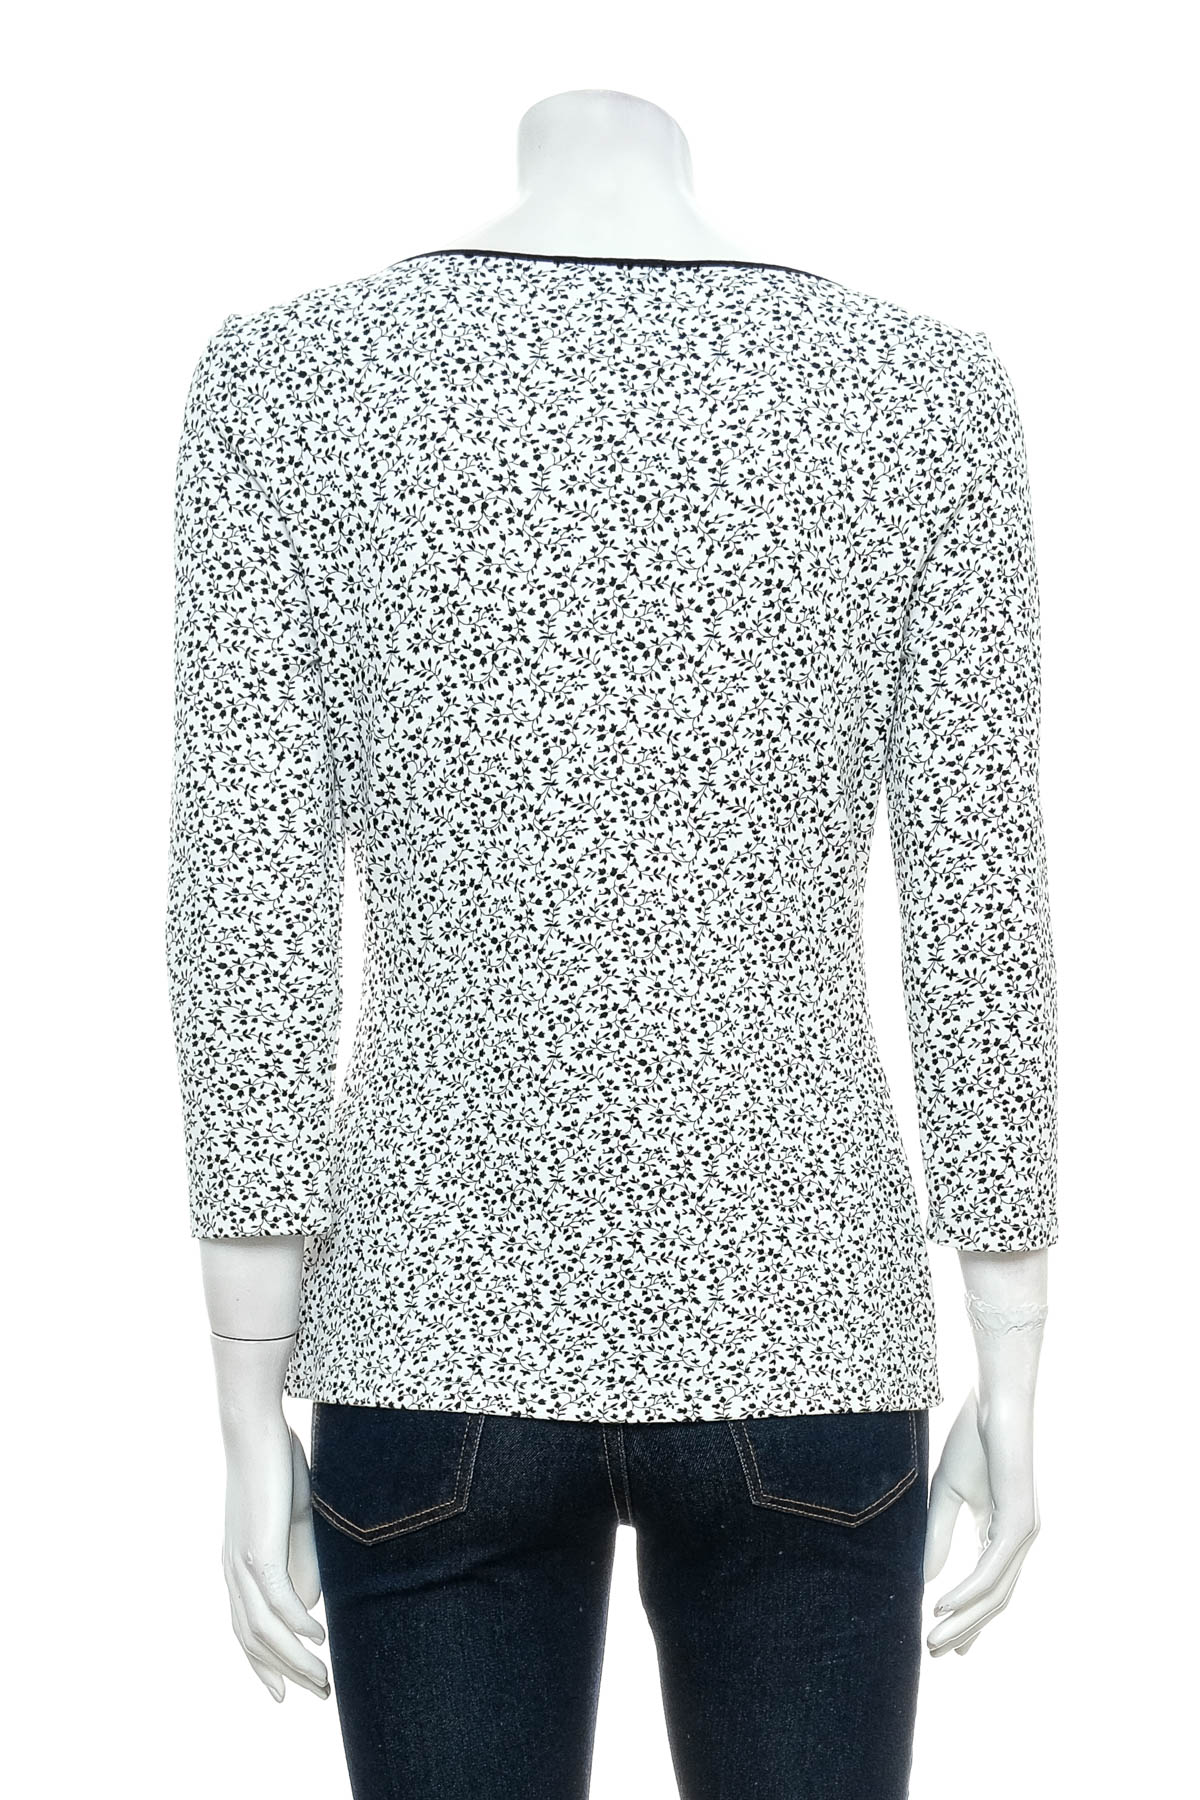 Women's blouse - Orsay - 1